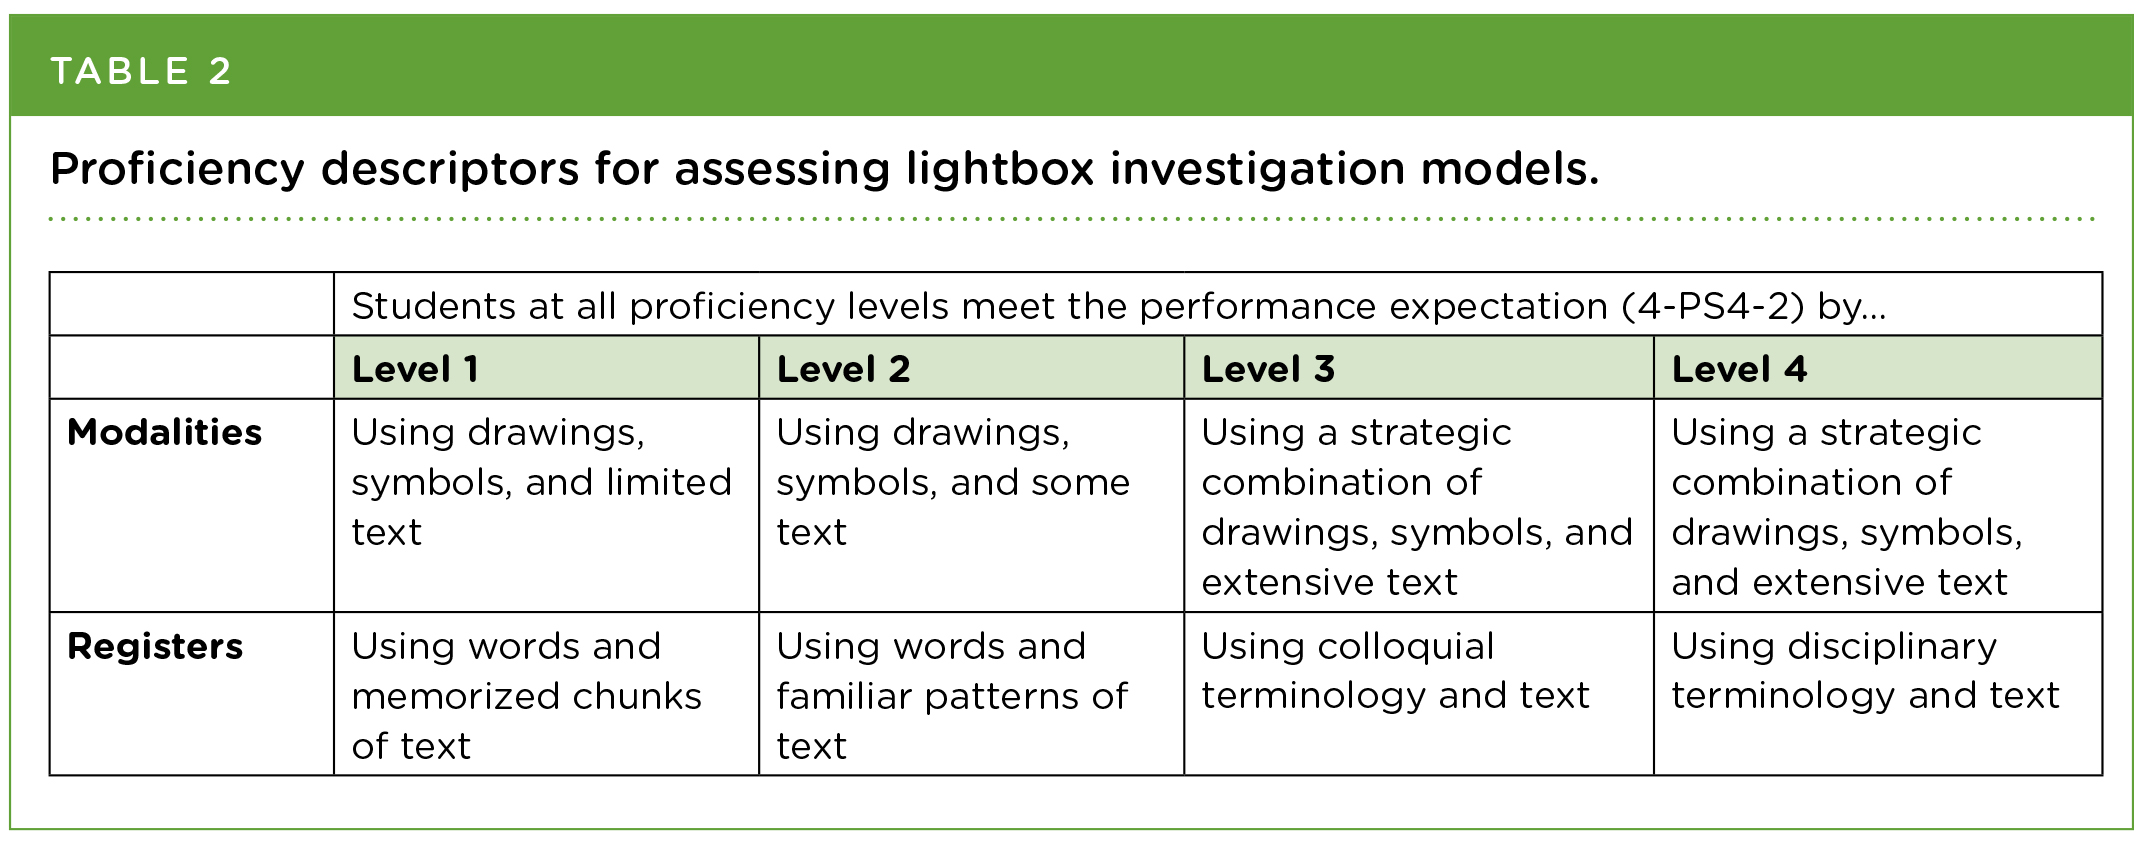 Proficiency descriptors for assessing lightbox investigation models.